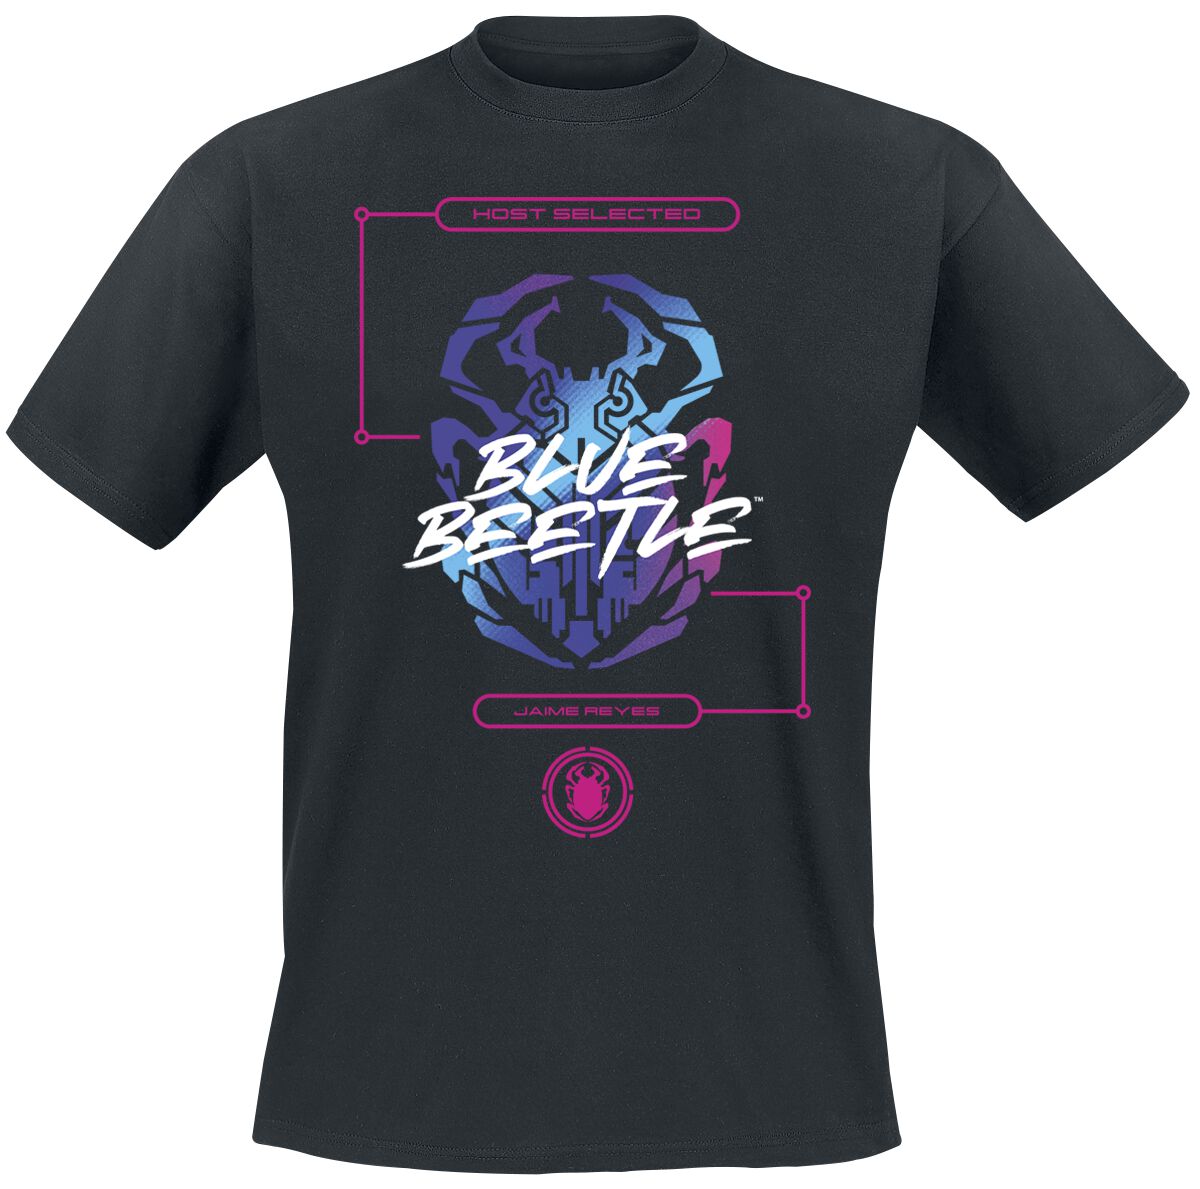 Blue Beetle Logo T-Shirt schwarz in M